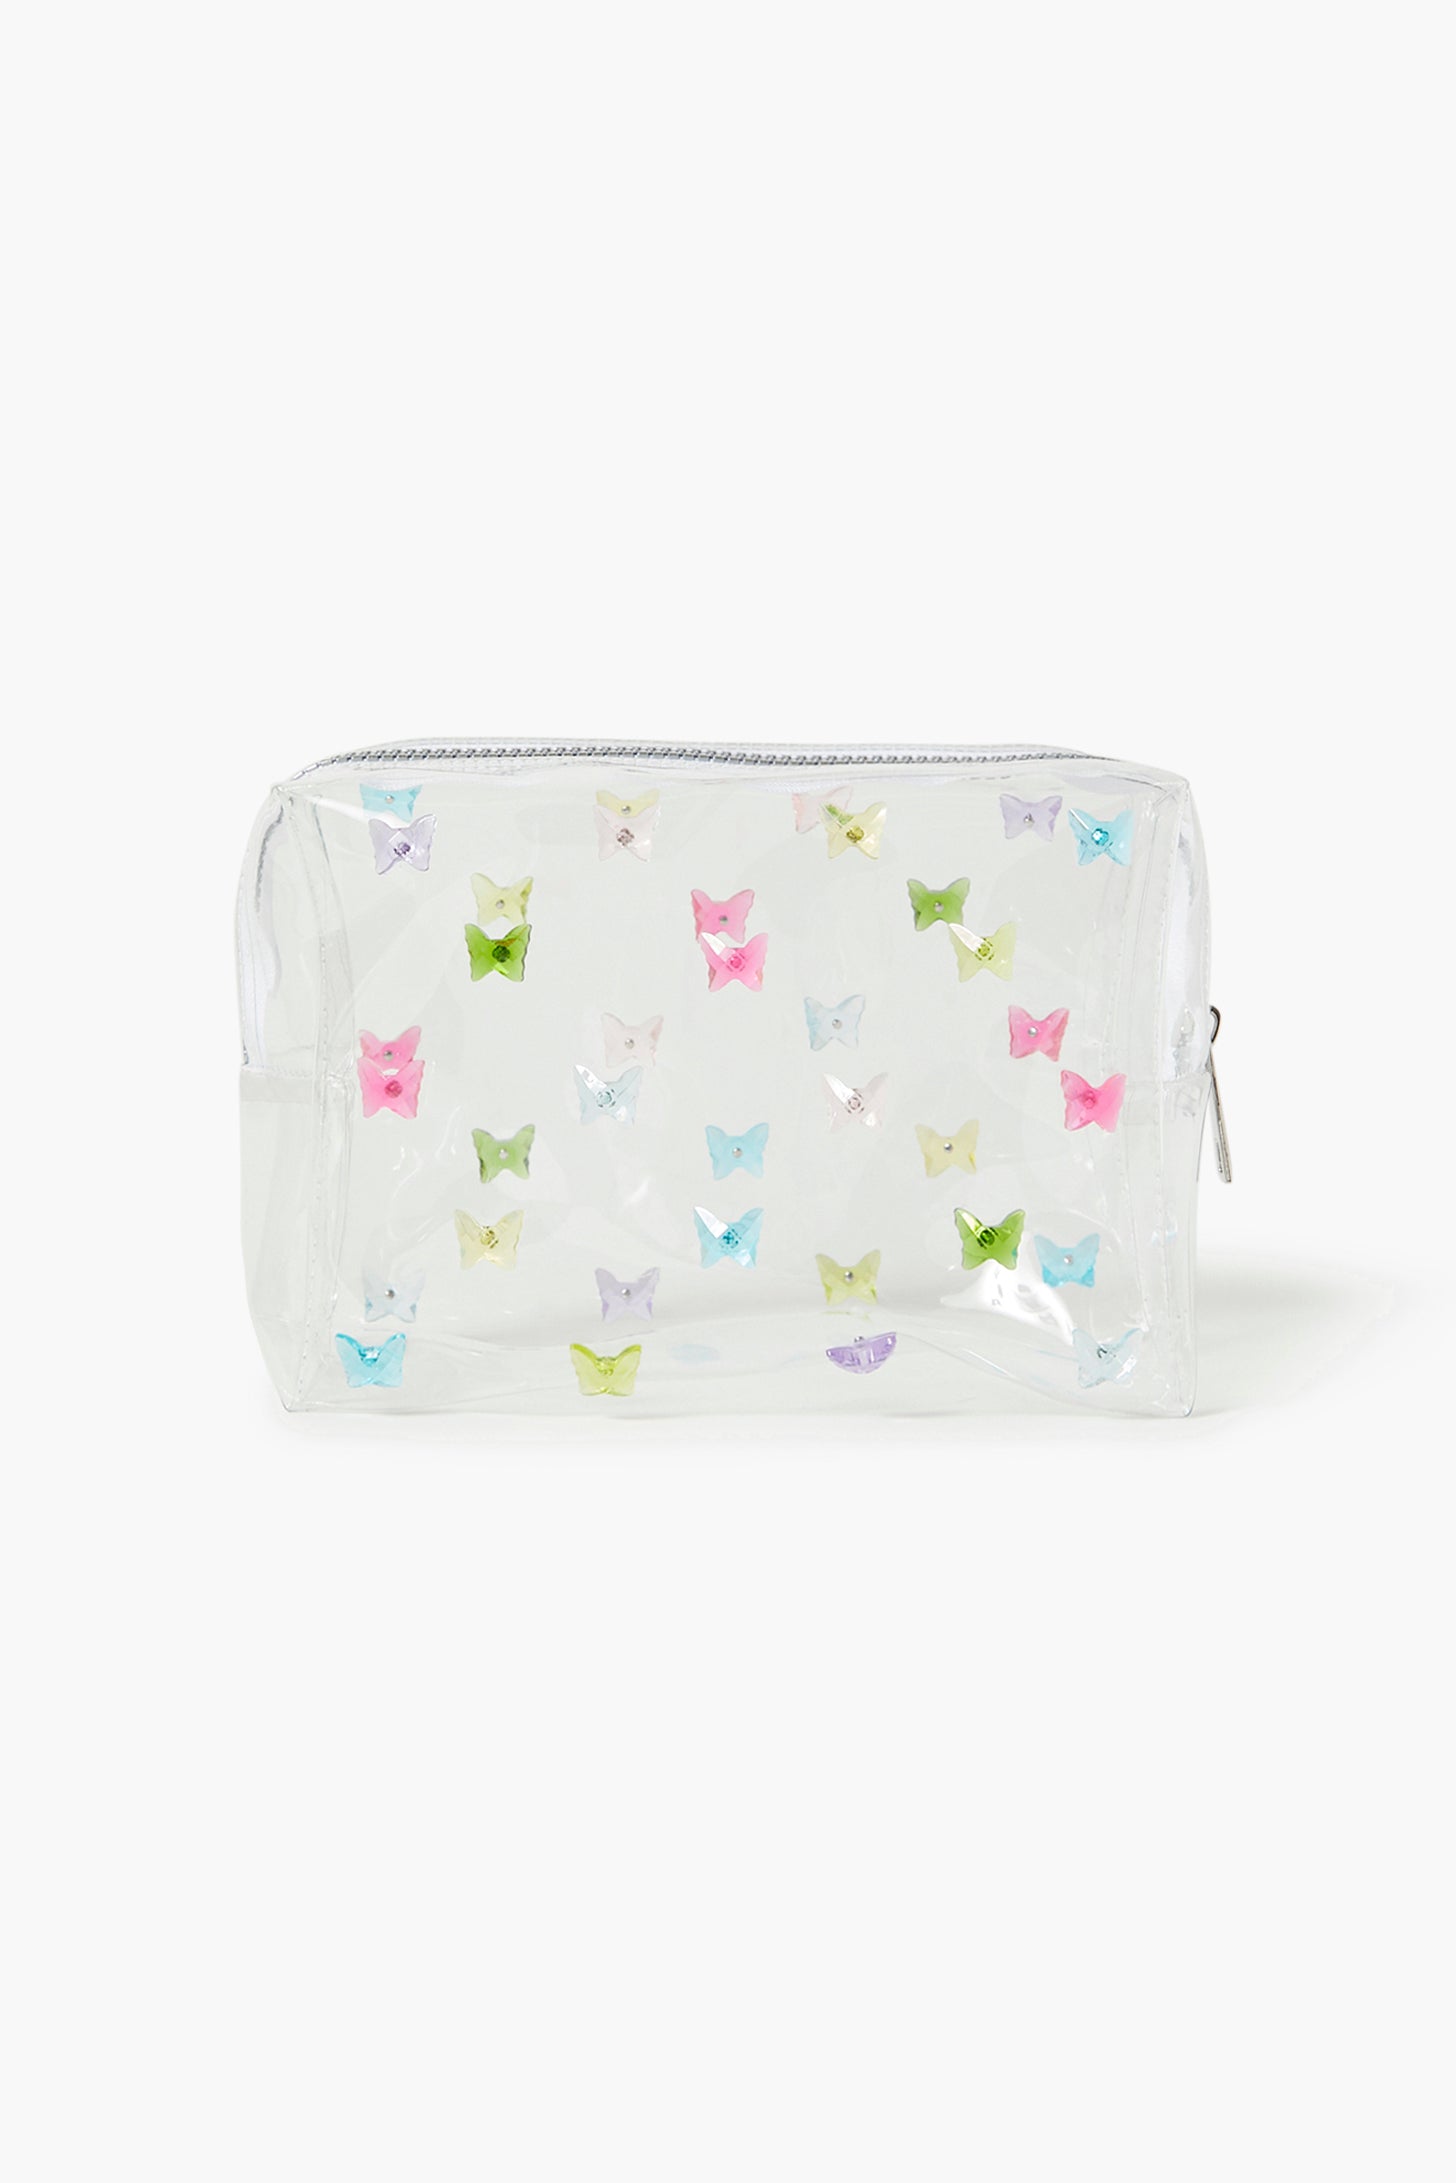 Clearmulti Butterfly Transparent Makeup Bag